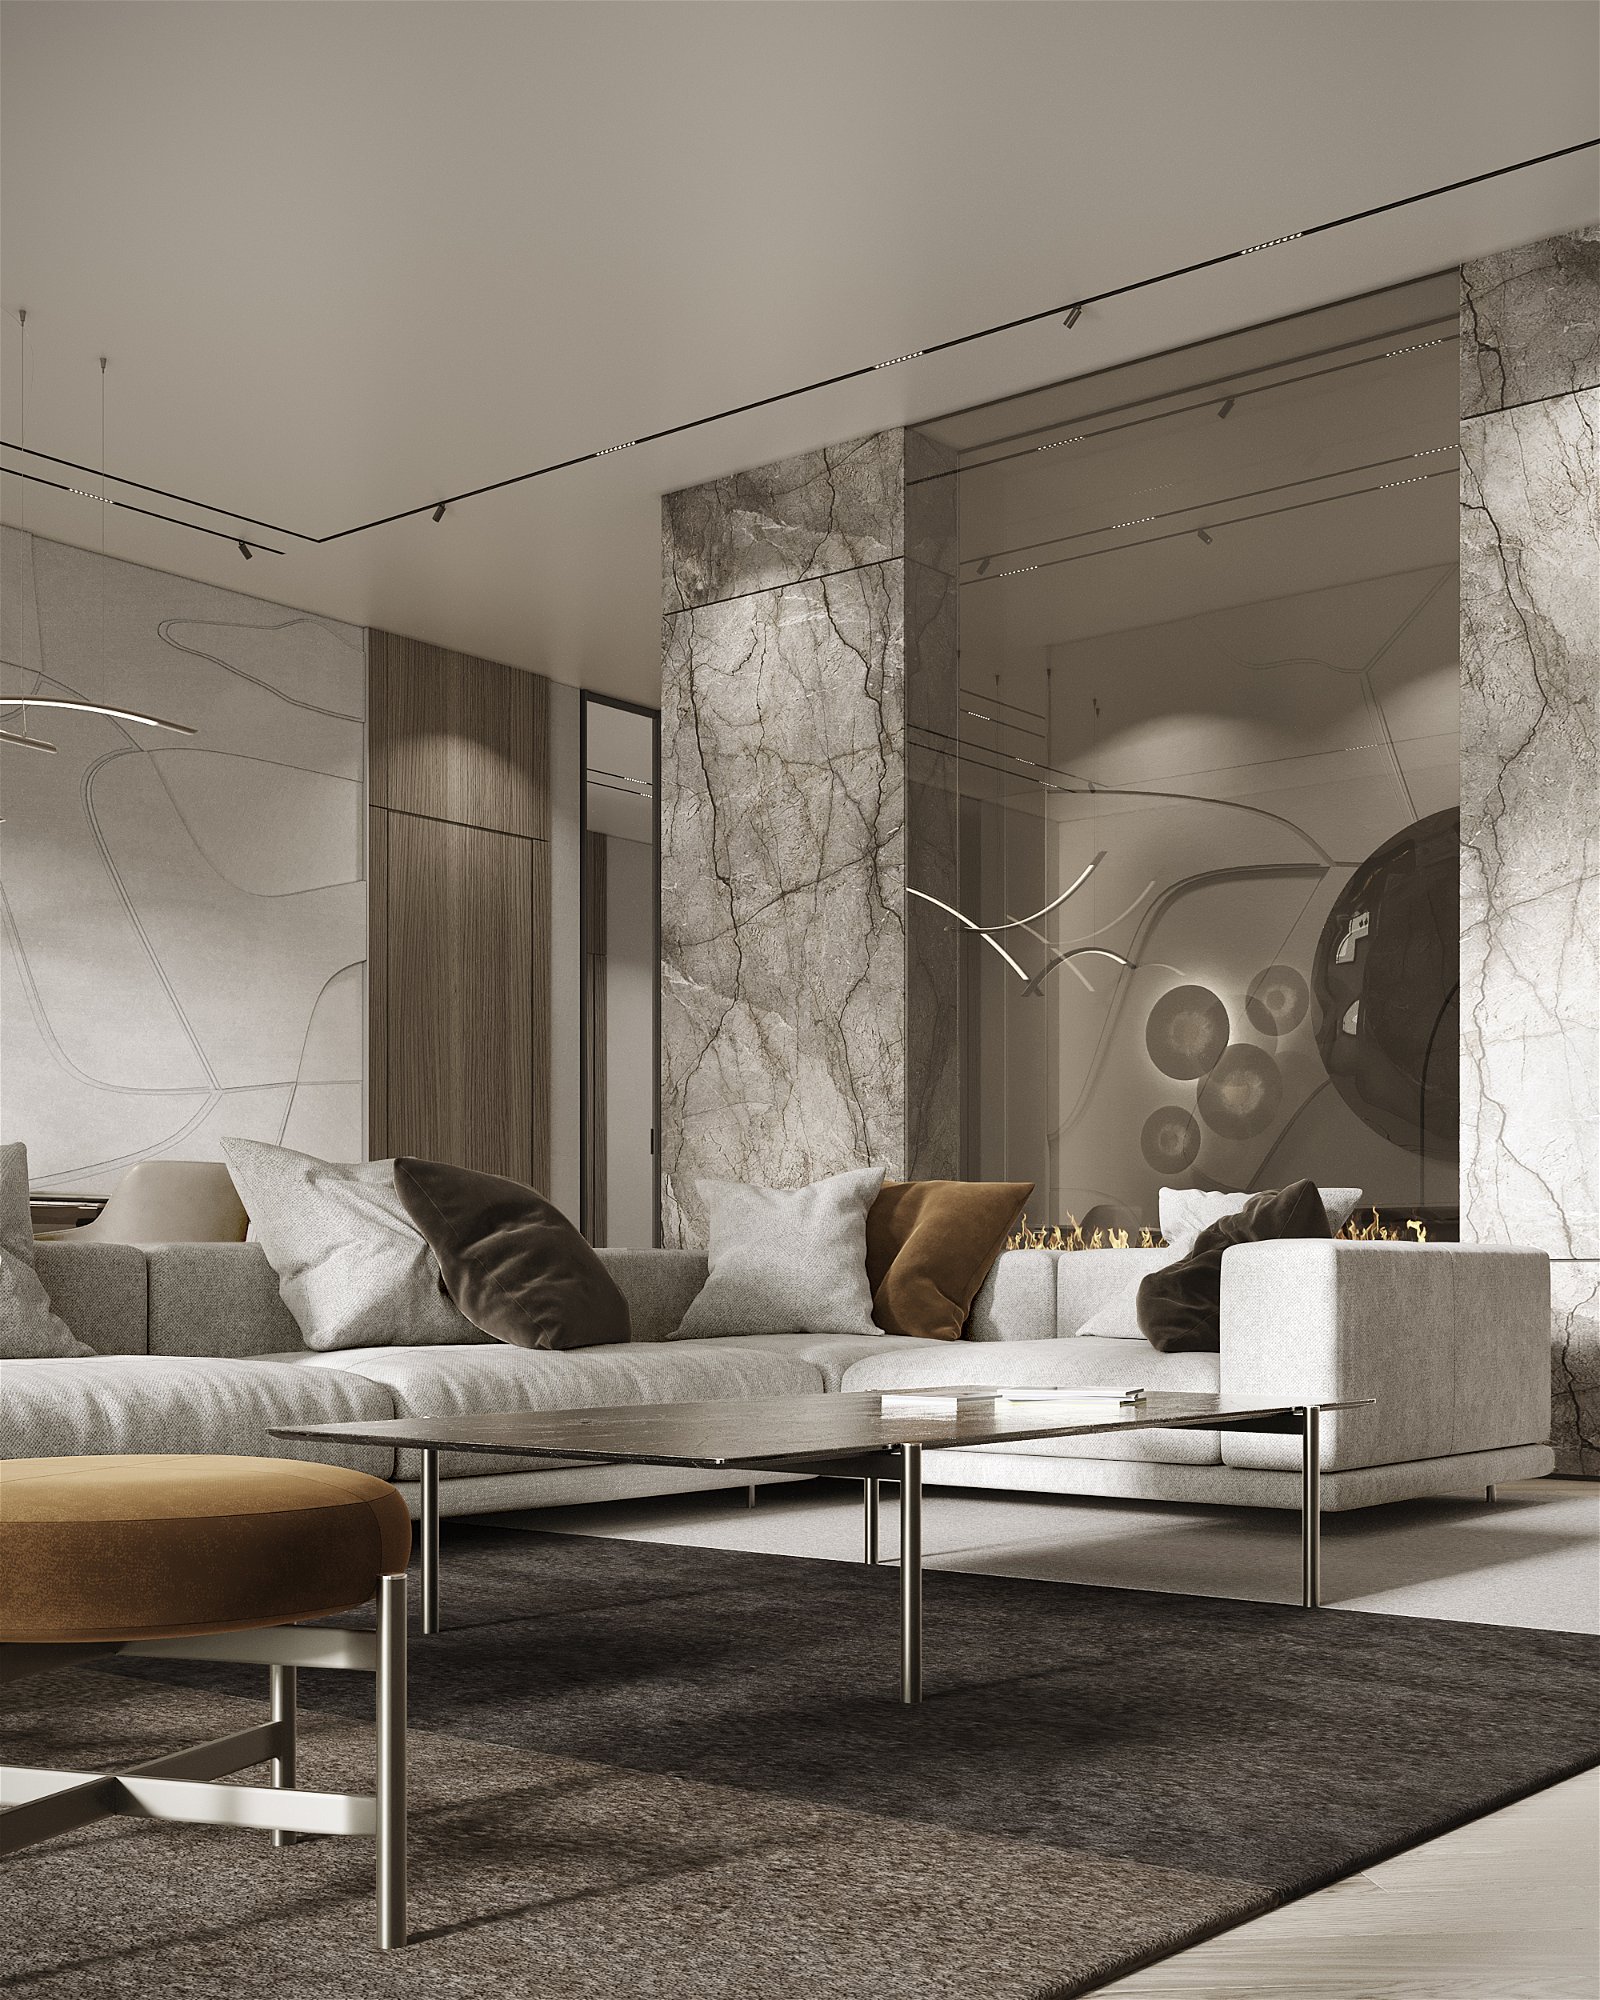 Les Floralies Monaco living room design